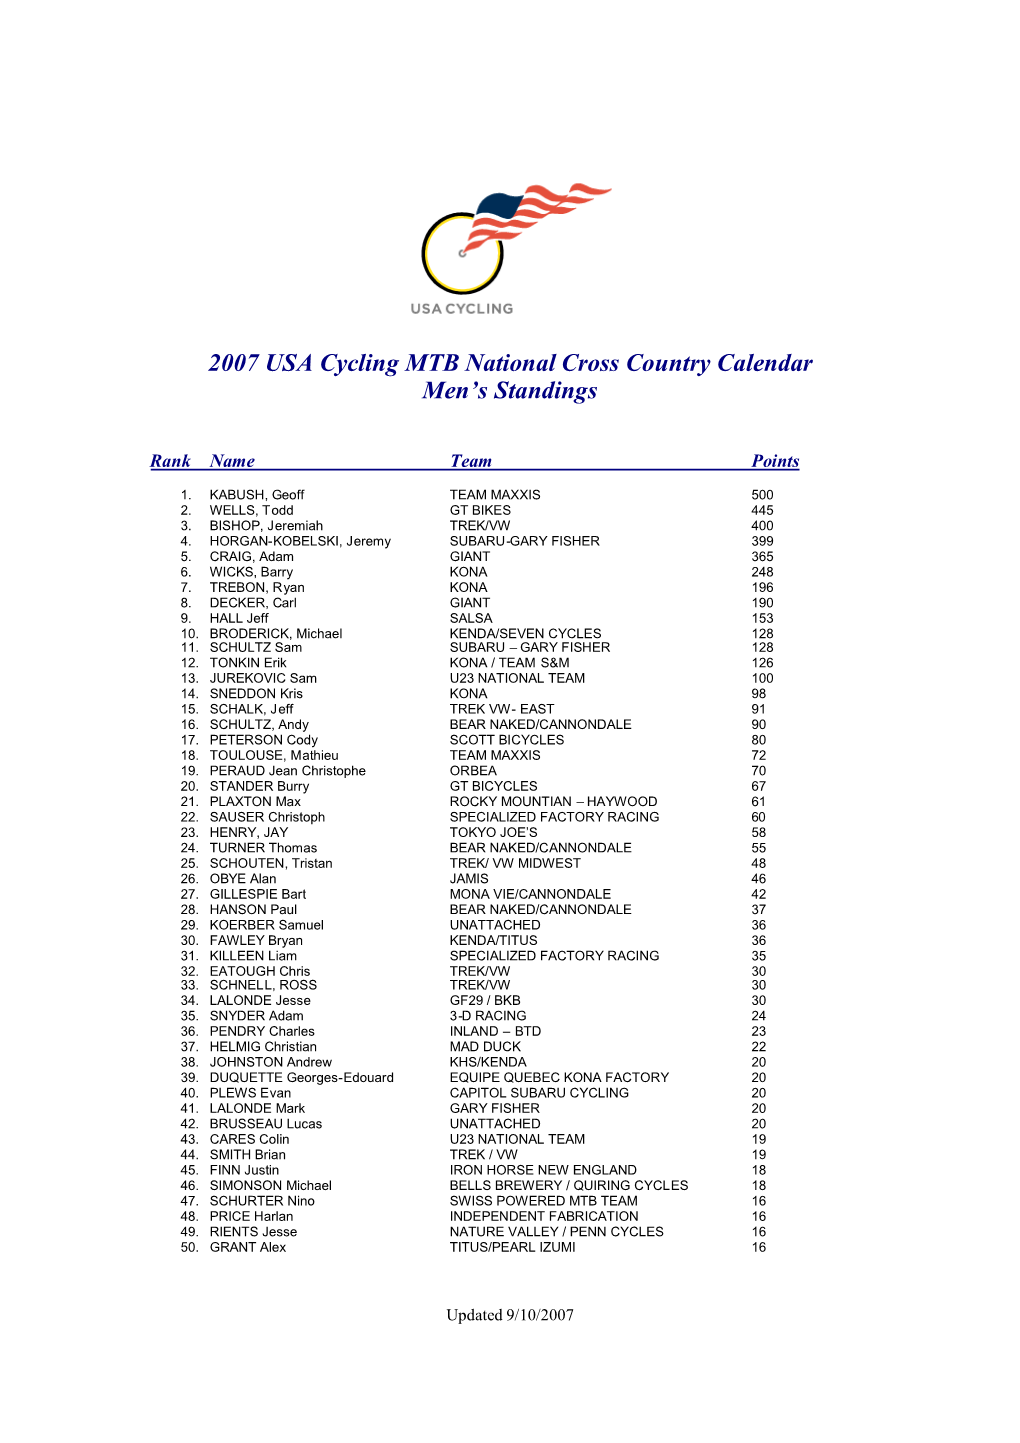 2007 USA Cycling MTB National Cross Country Calendar Men's